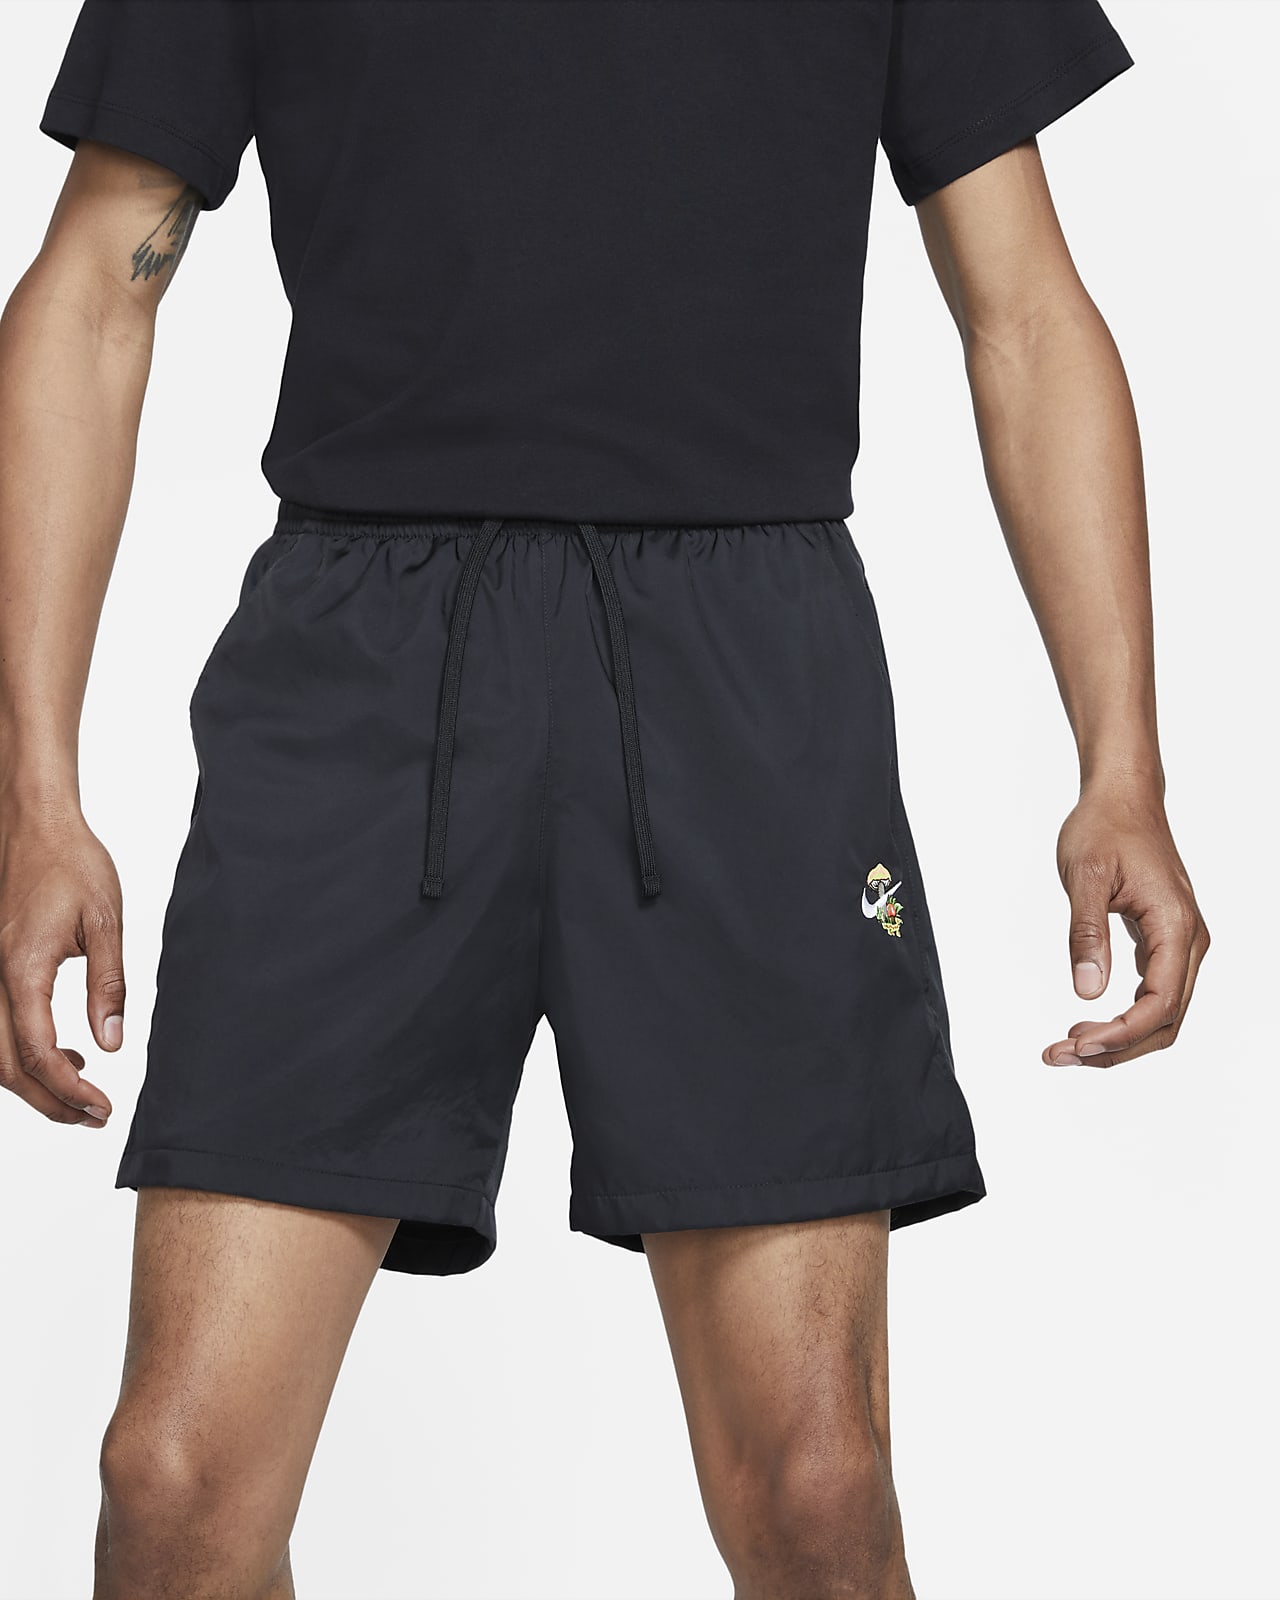 nike men's sportswear novelty woven shorts stores